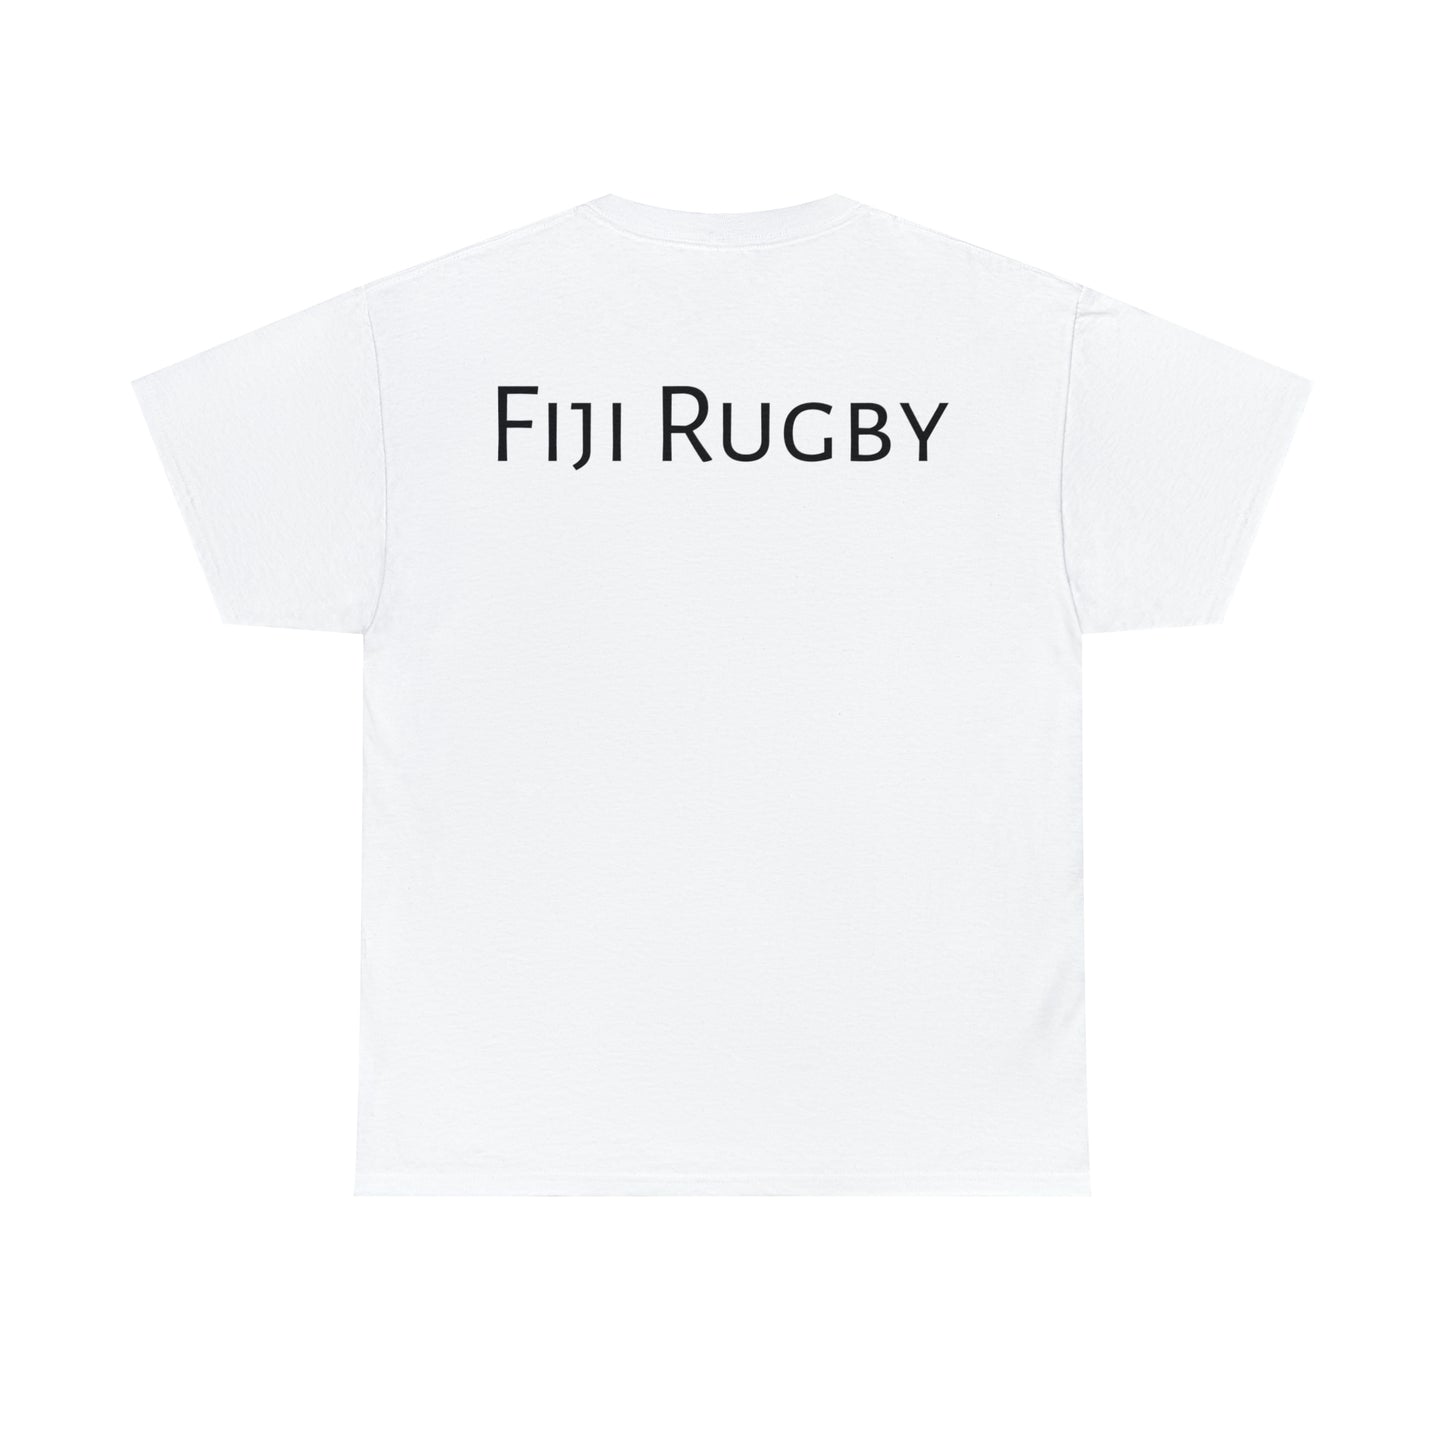 Fiji World Cup Winners - light shirts